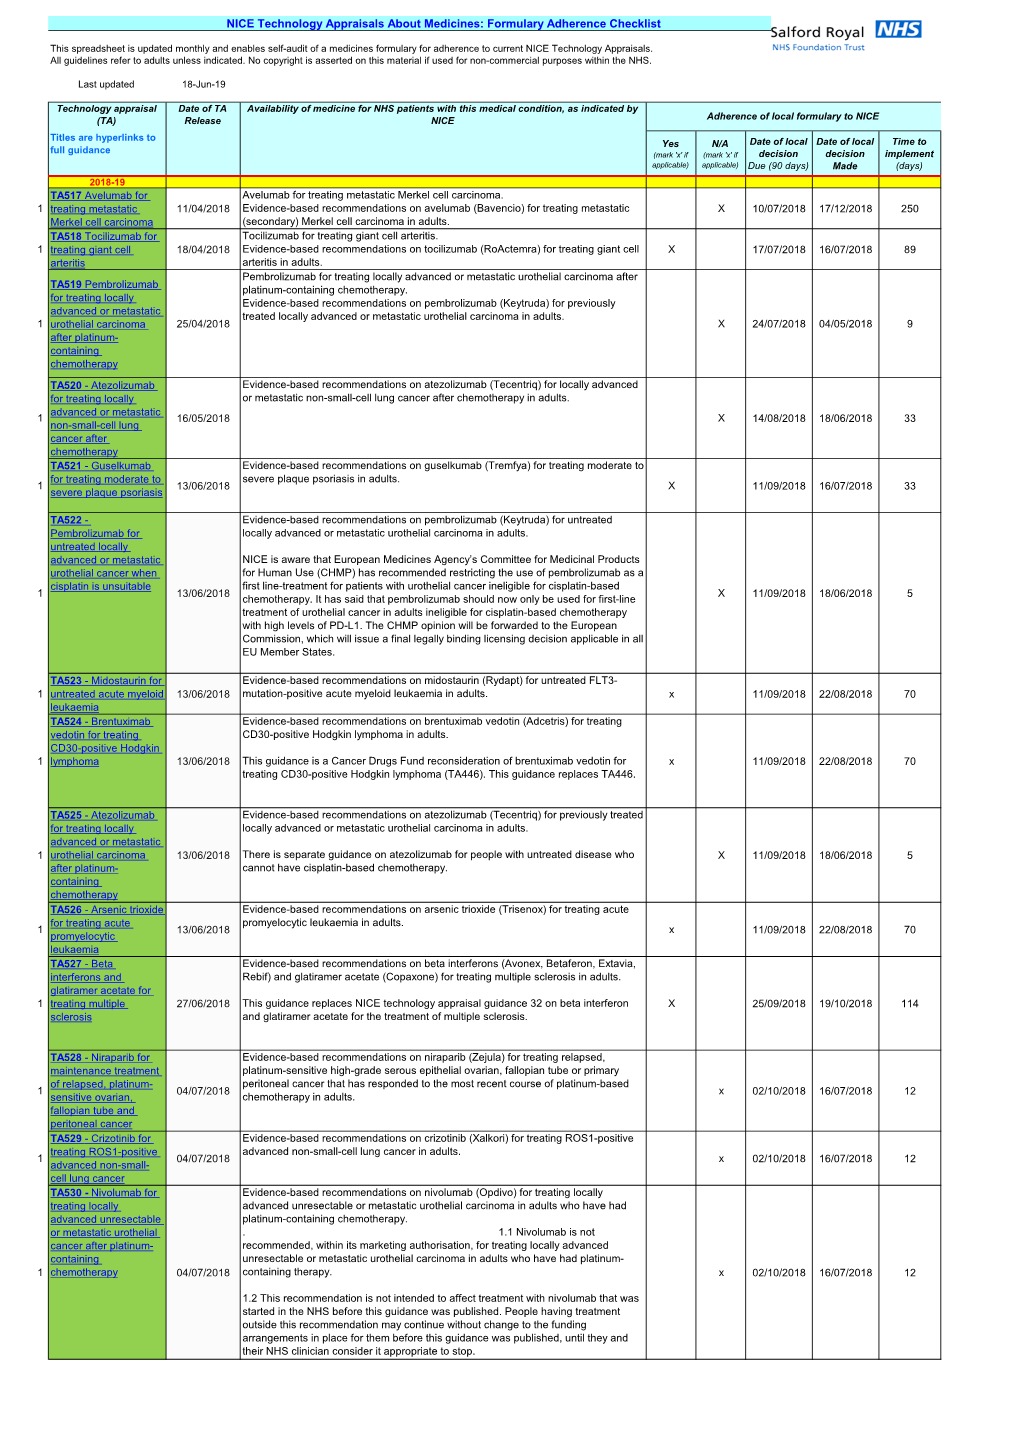 Formulary Adherence Checklist